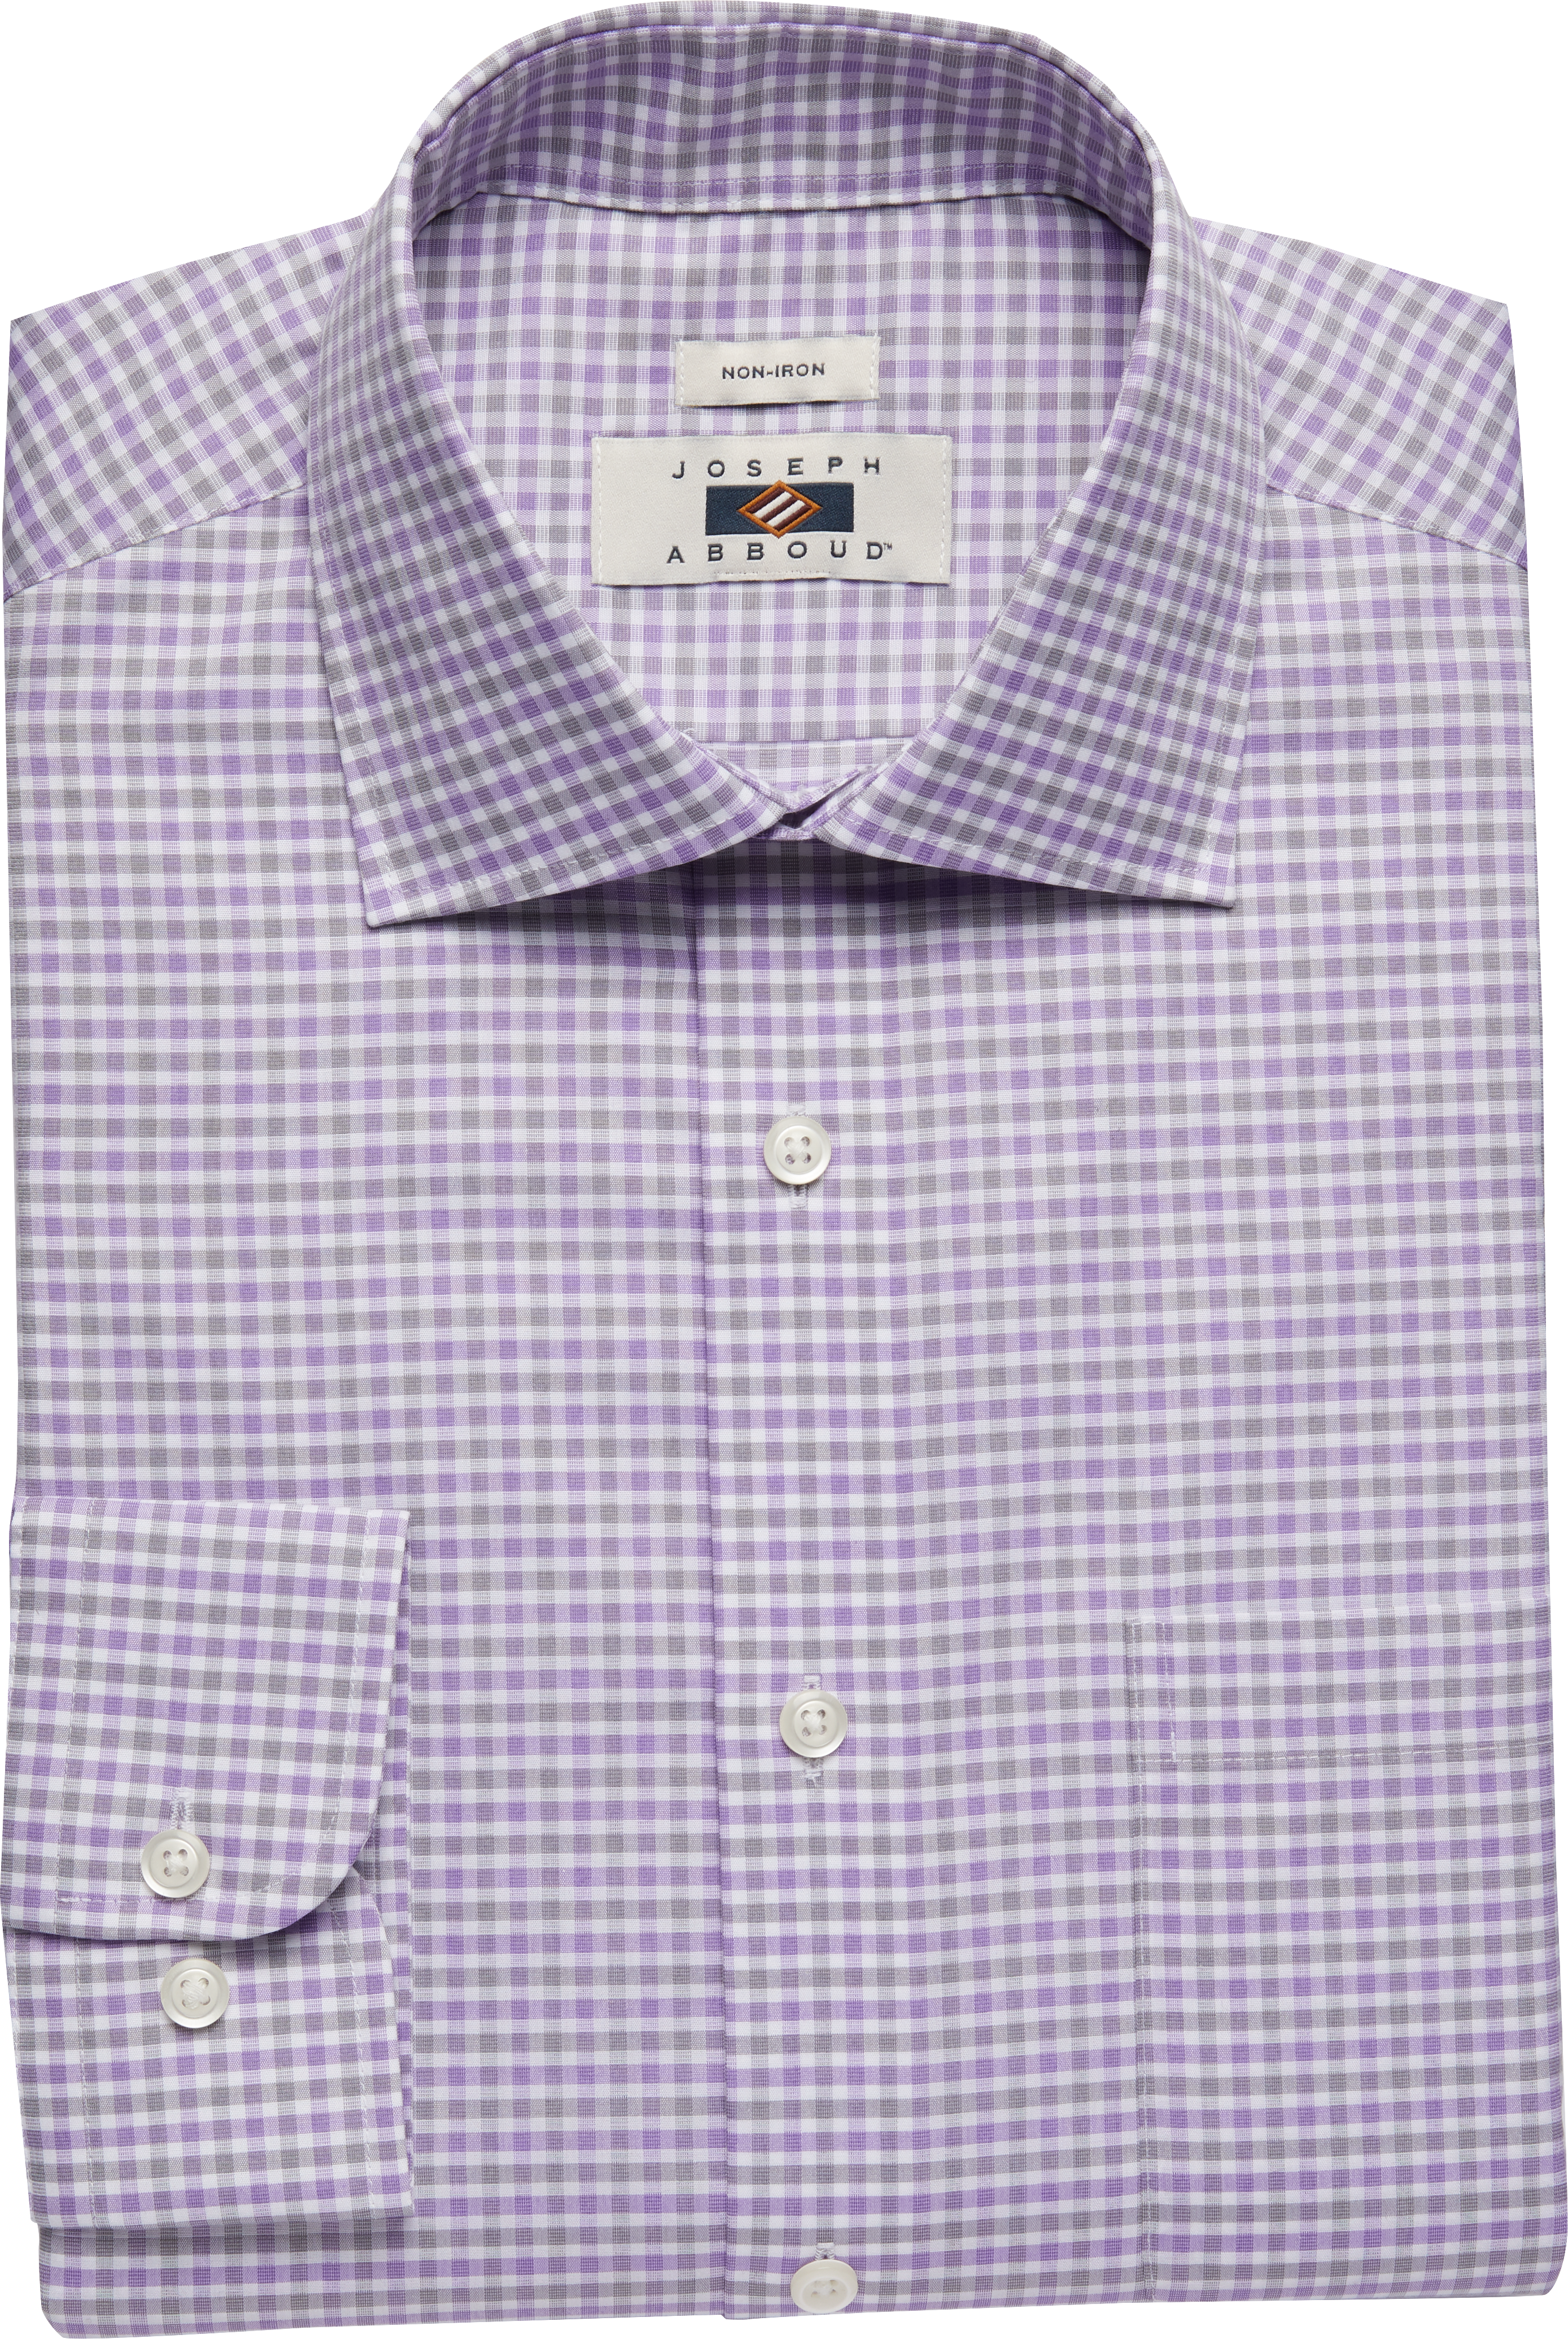 Joseph Abboud Purple Gingham Dress Shirt - Men's Sale | Men's Wearhouse